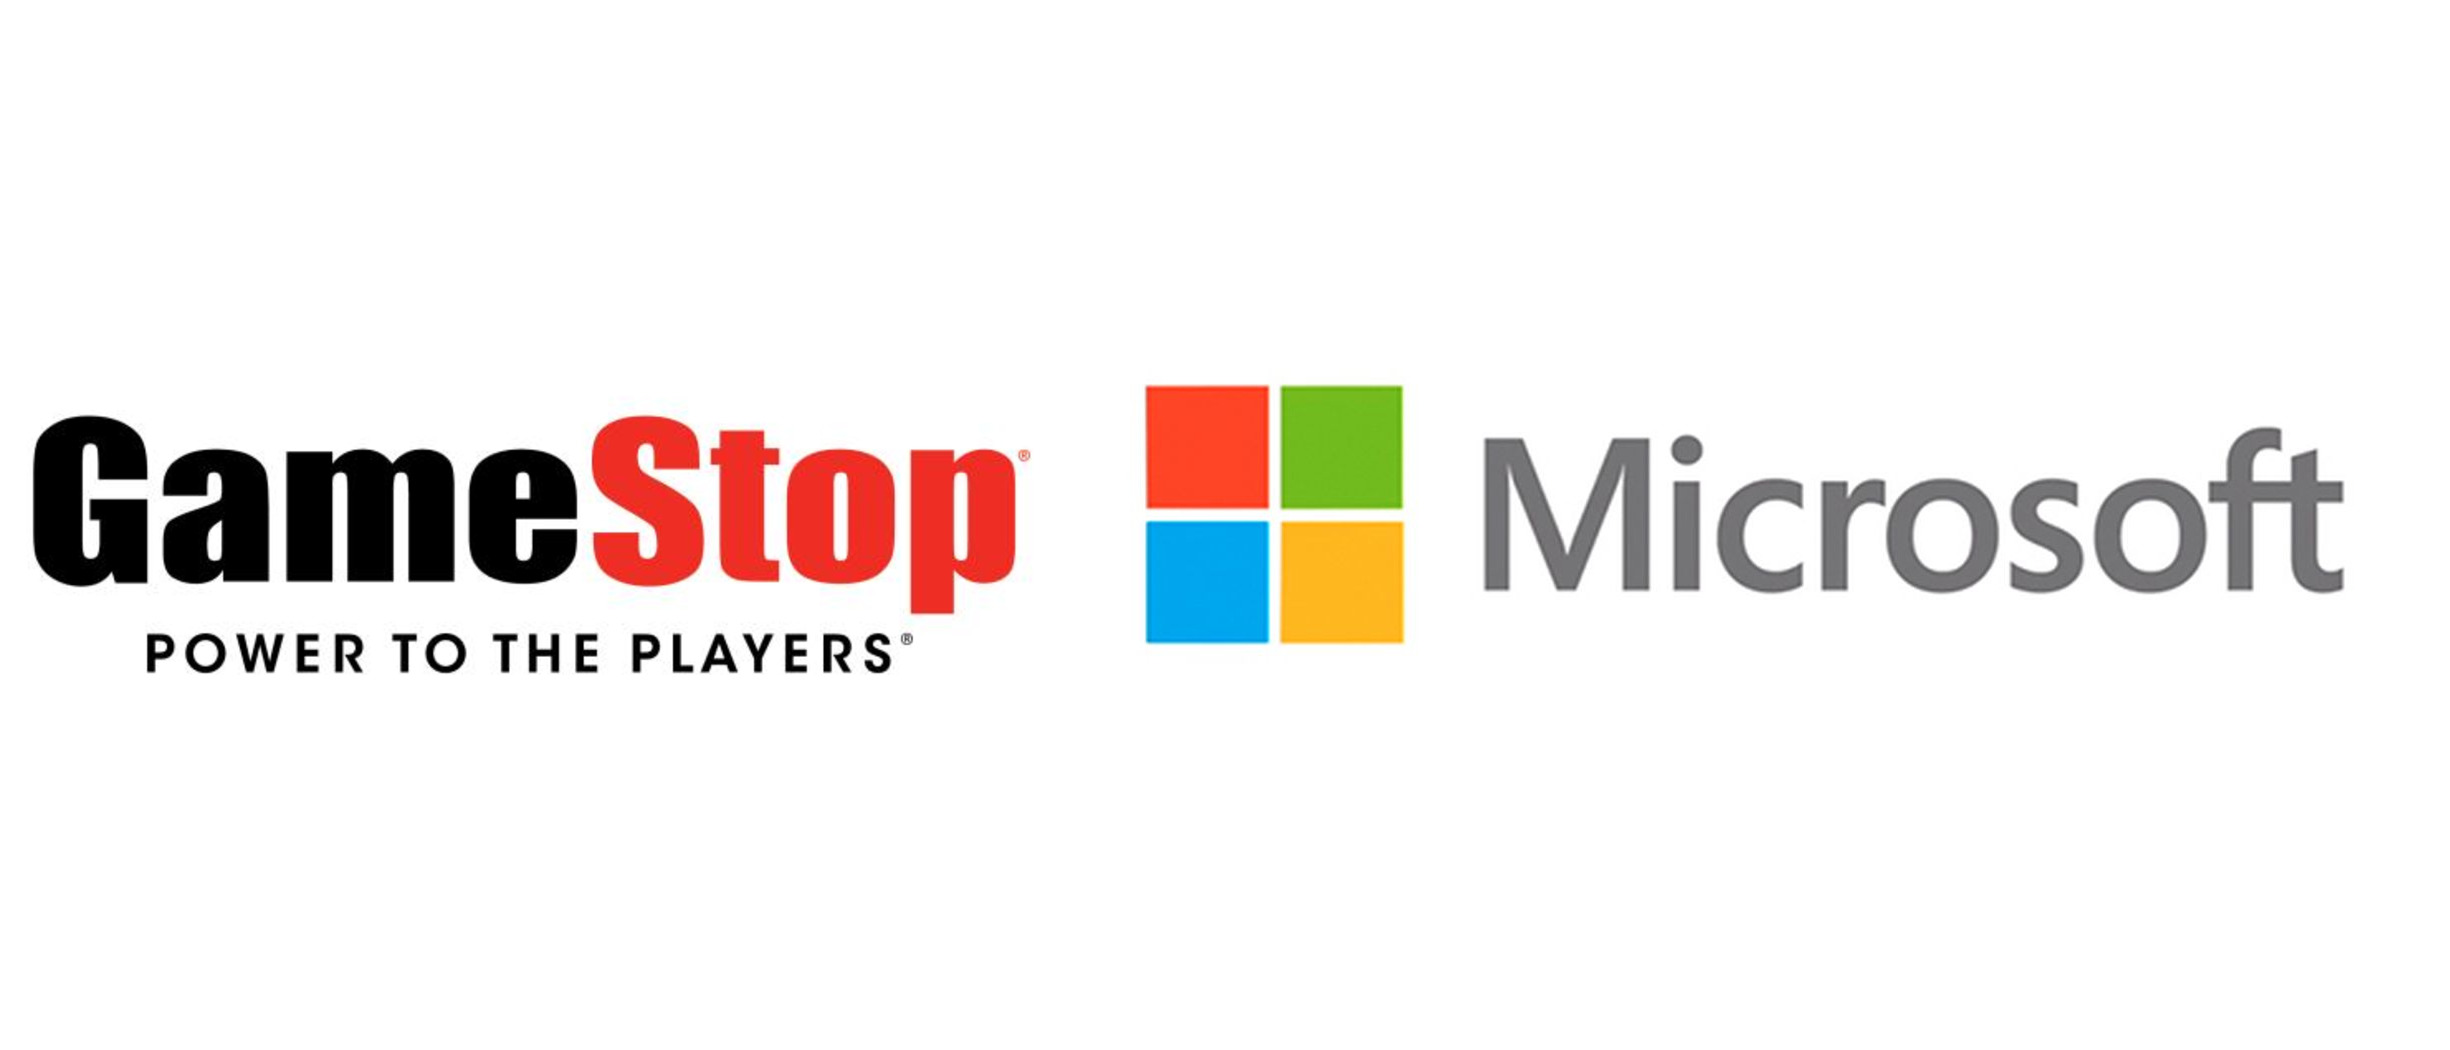 Gamestop and Microsoft partnership